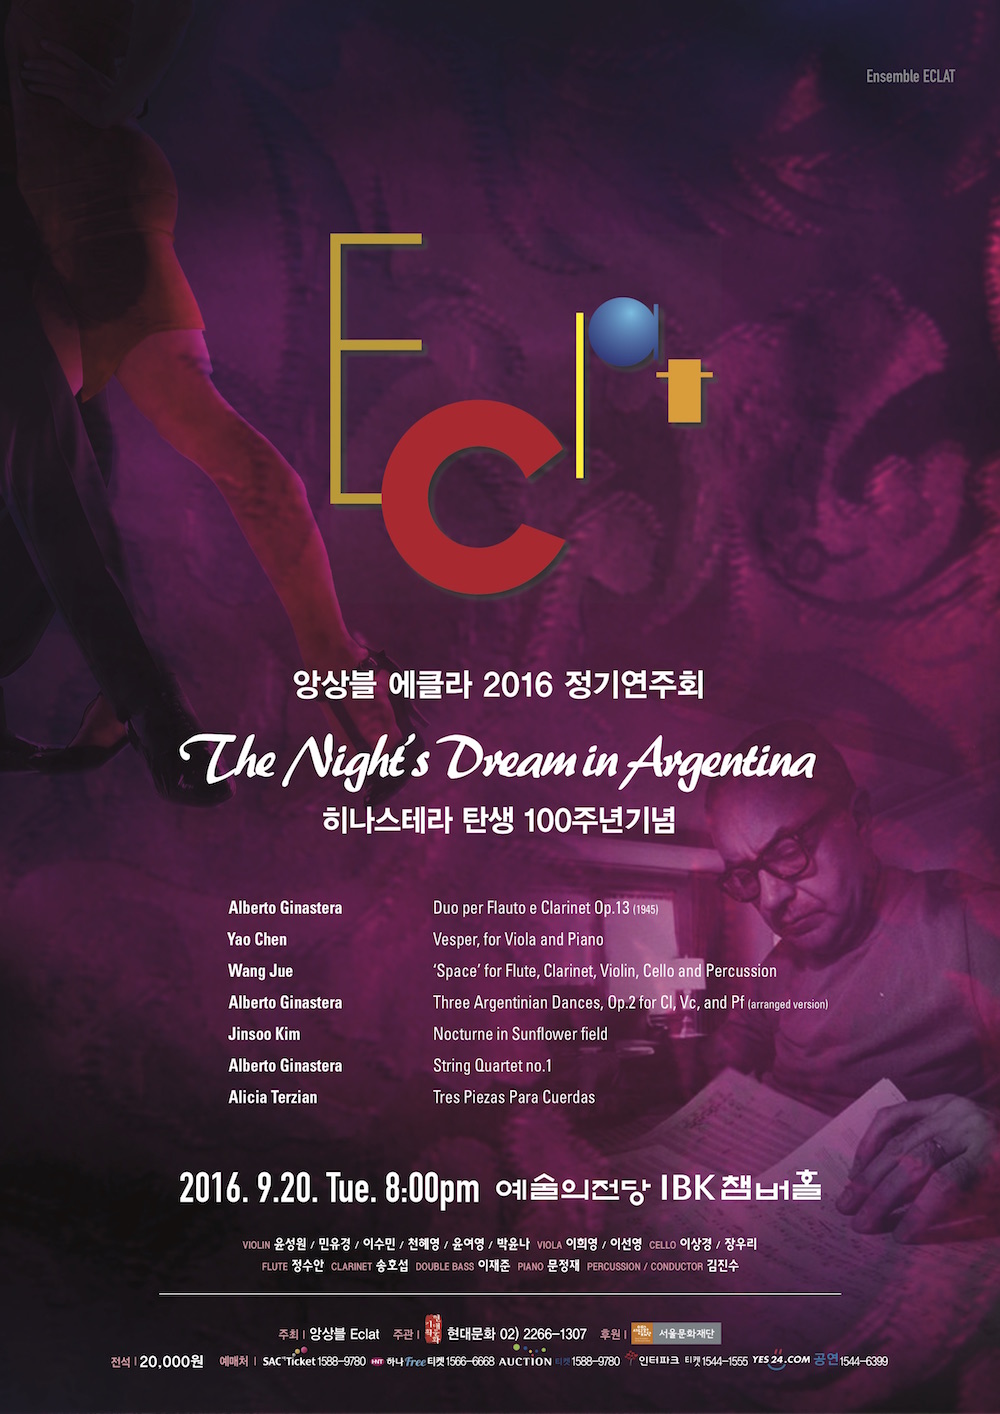 Vesper for viola and piano: asian premiere by ensemble Eclat in Korea